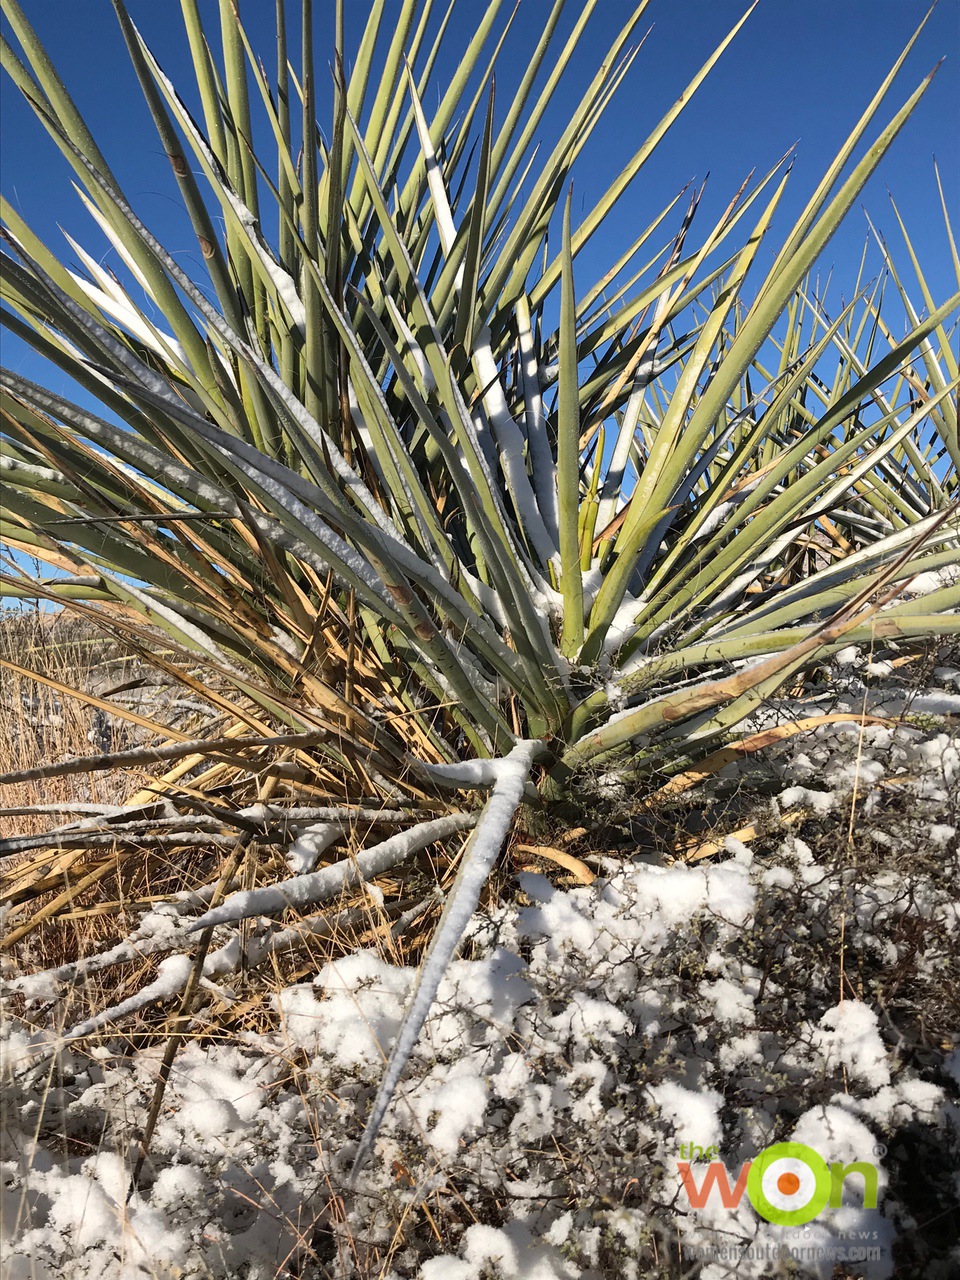 Chihuahuan desert yucca